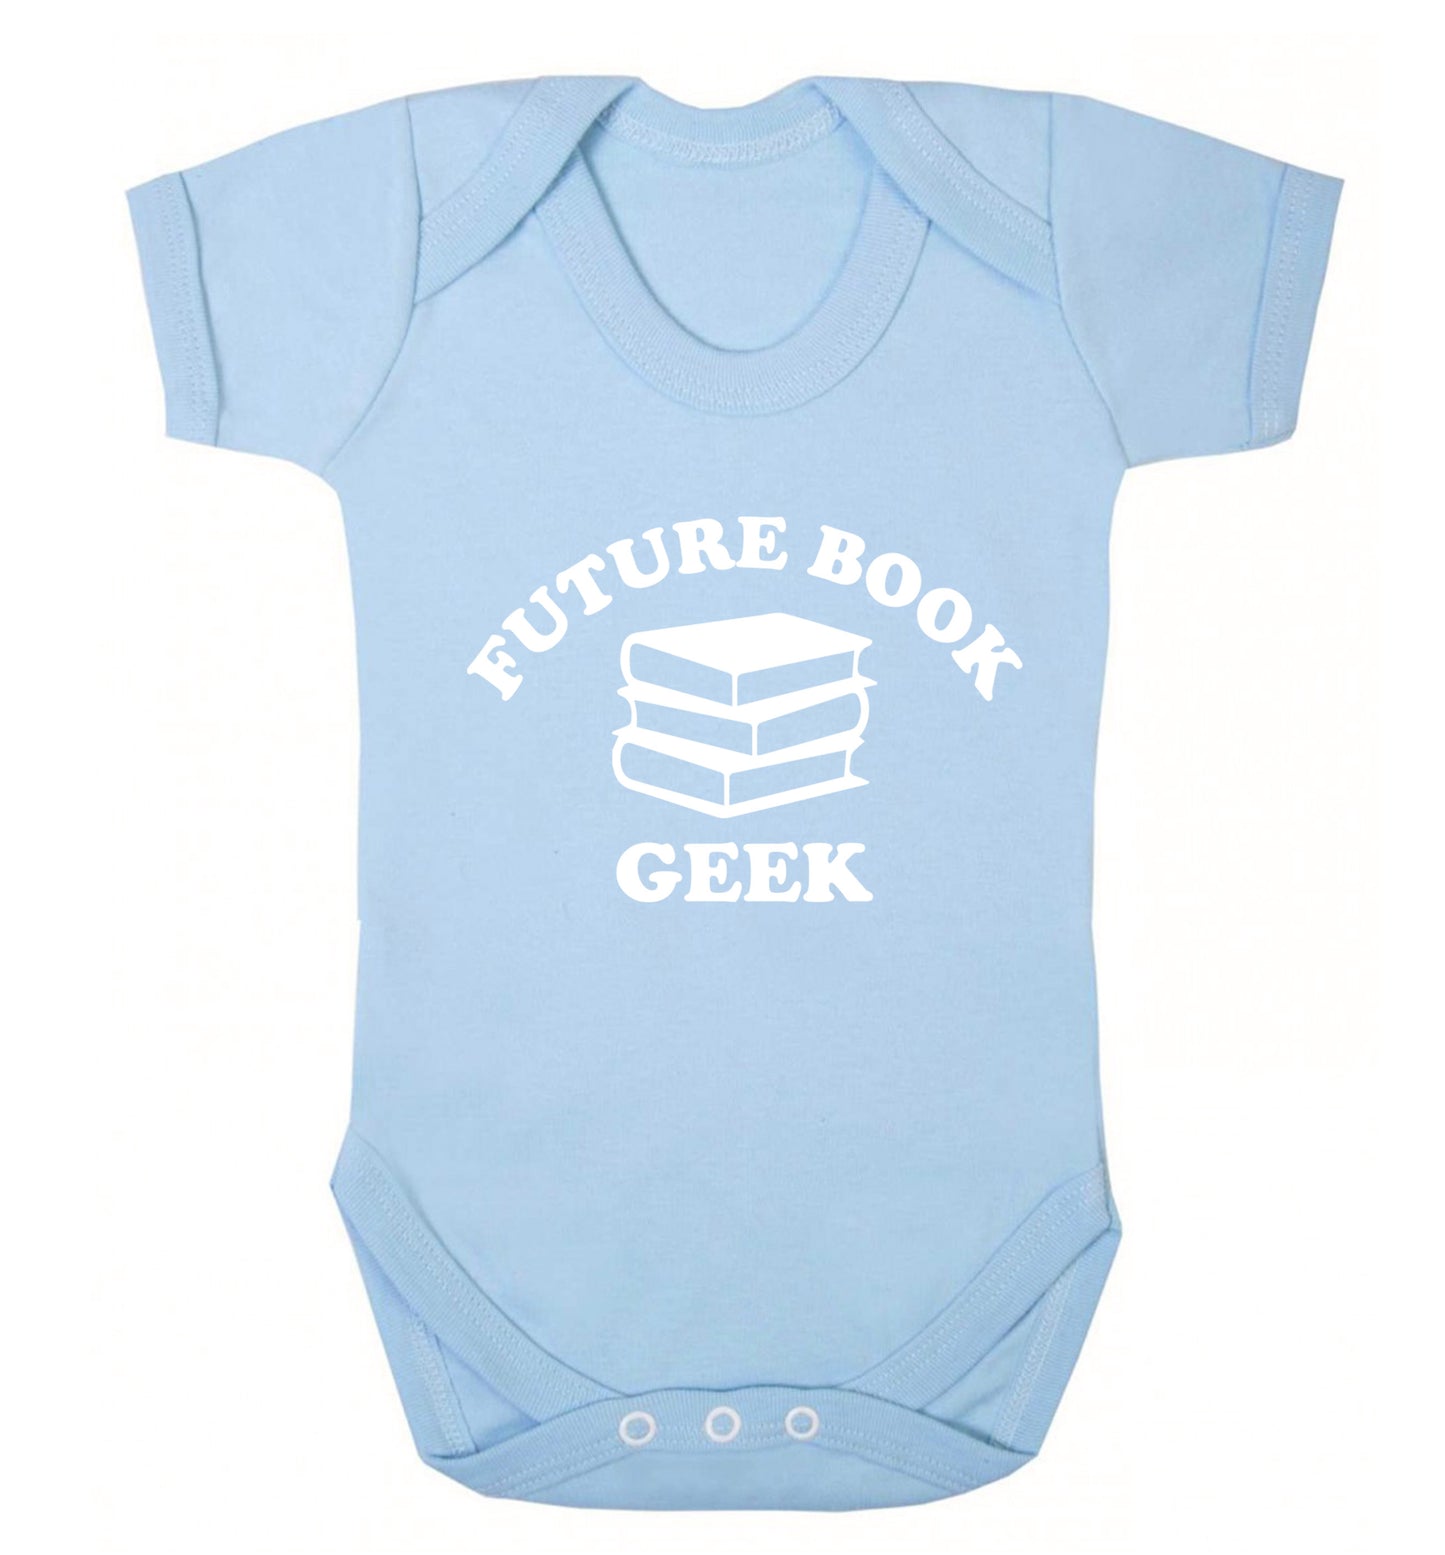 Future book geek Baby Vest pale blue 18-24 months